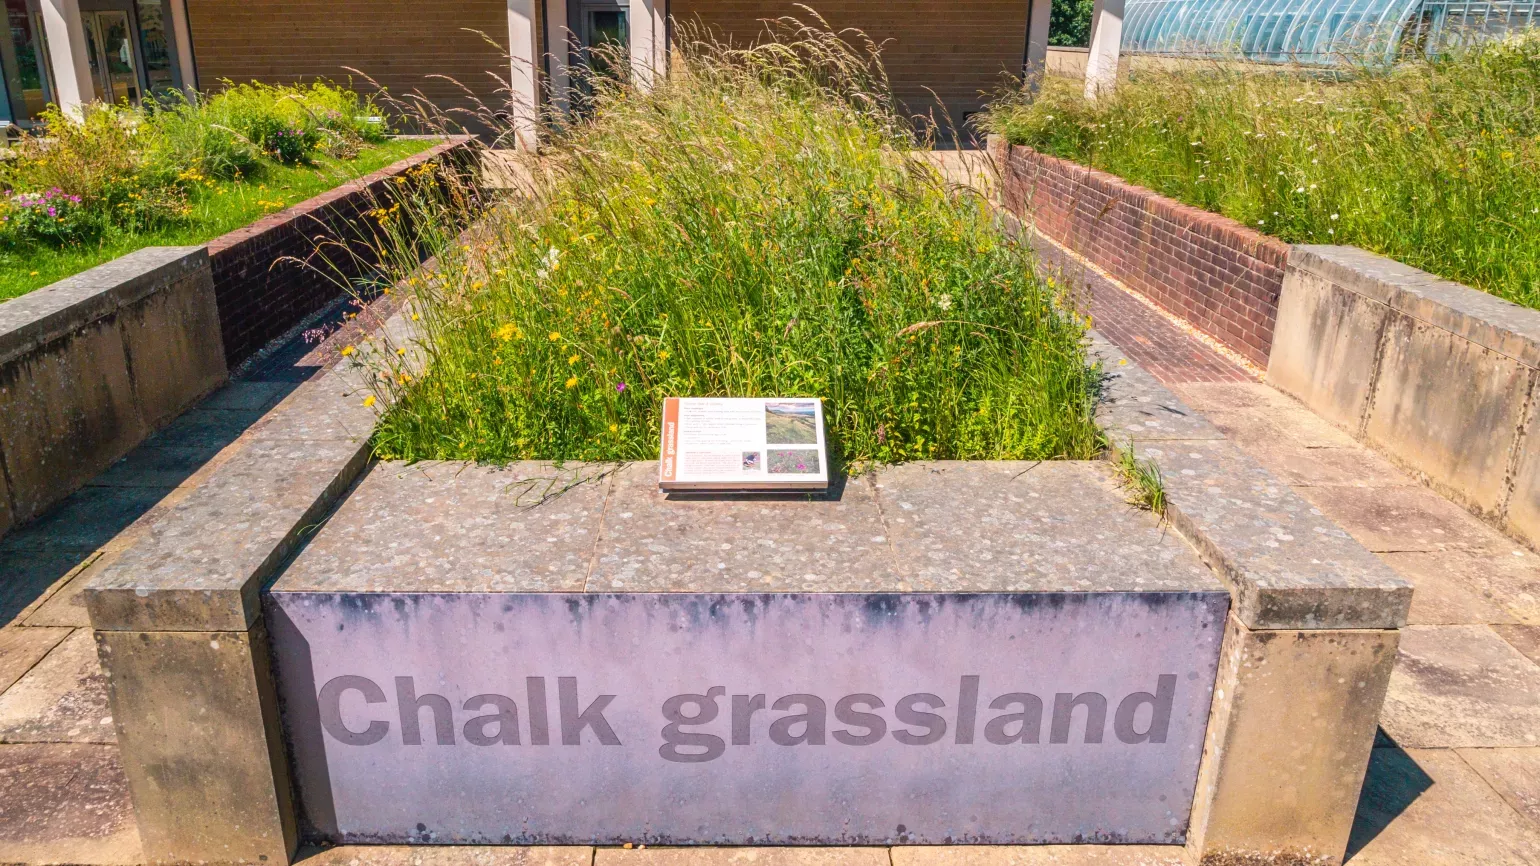 A planting of chalk grassland plants